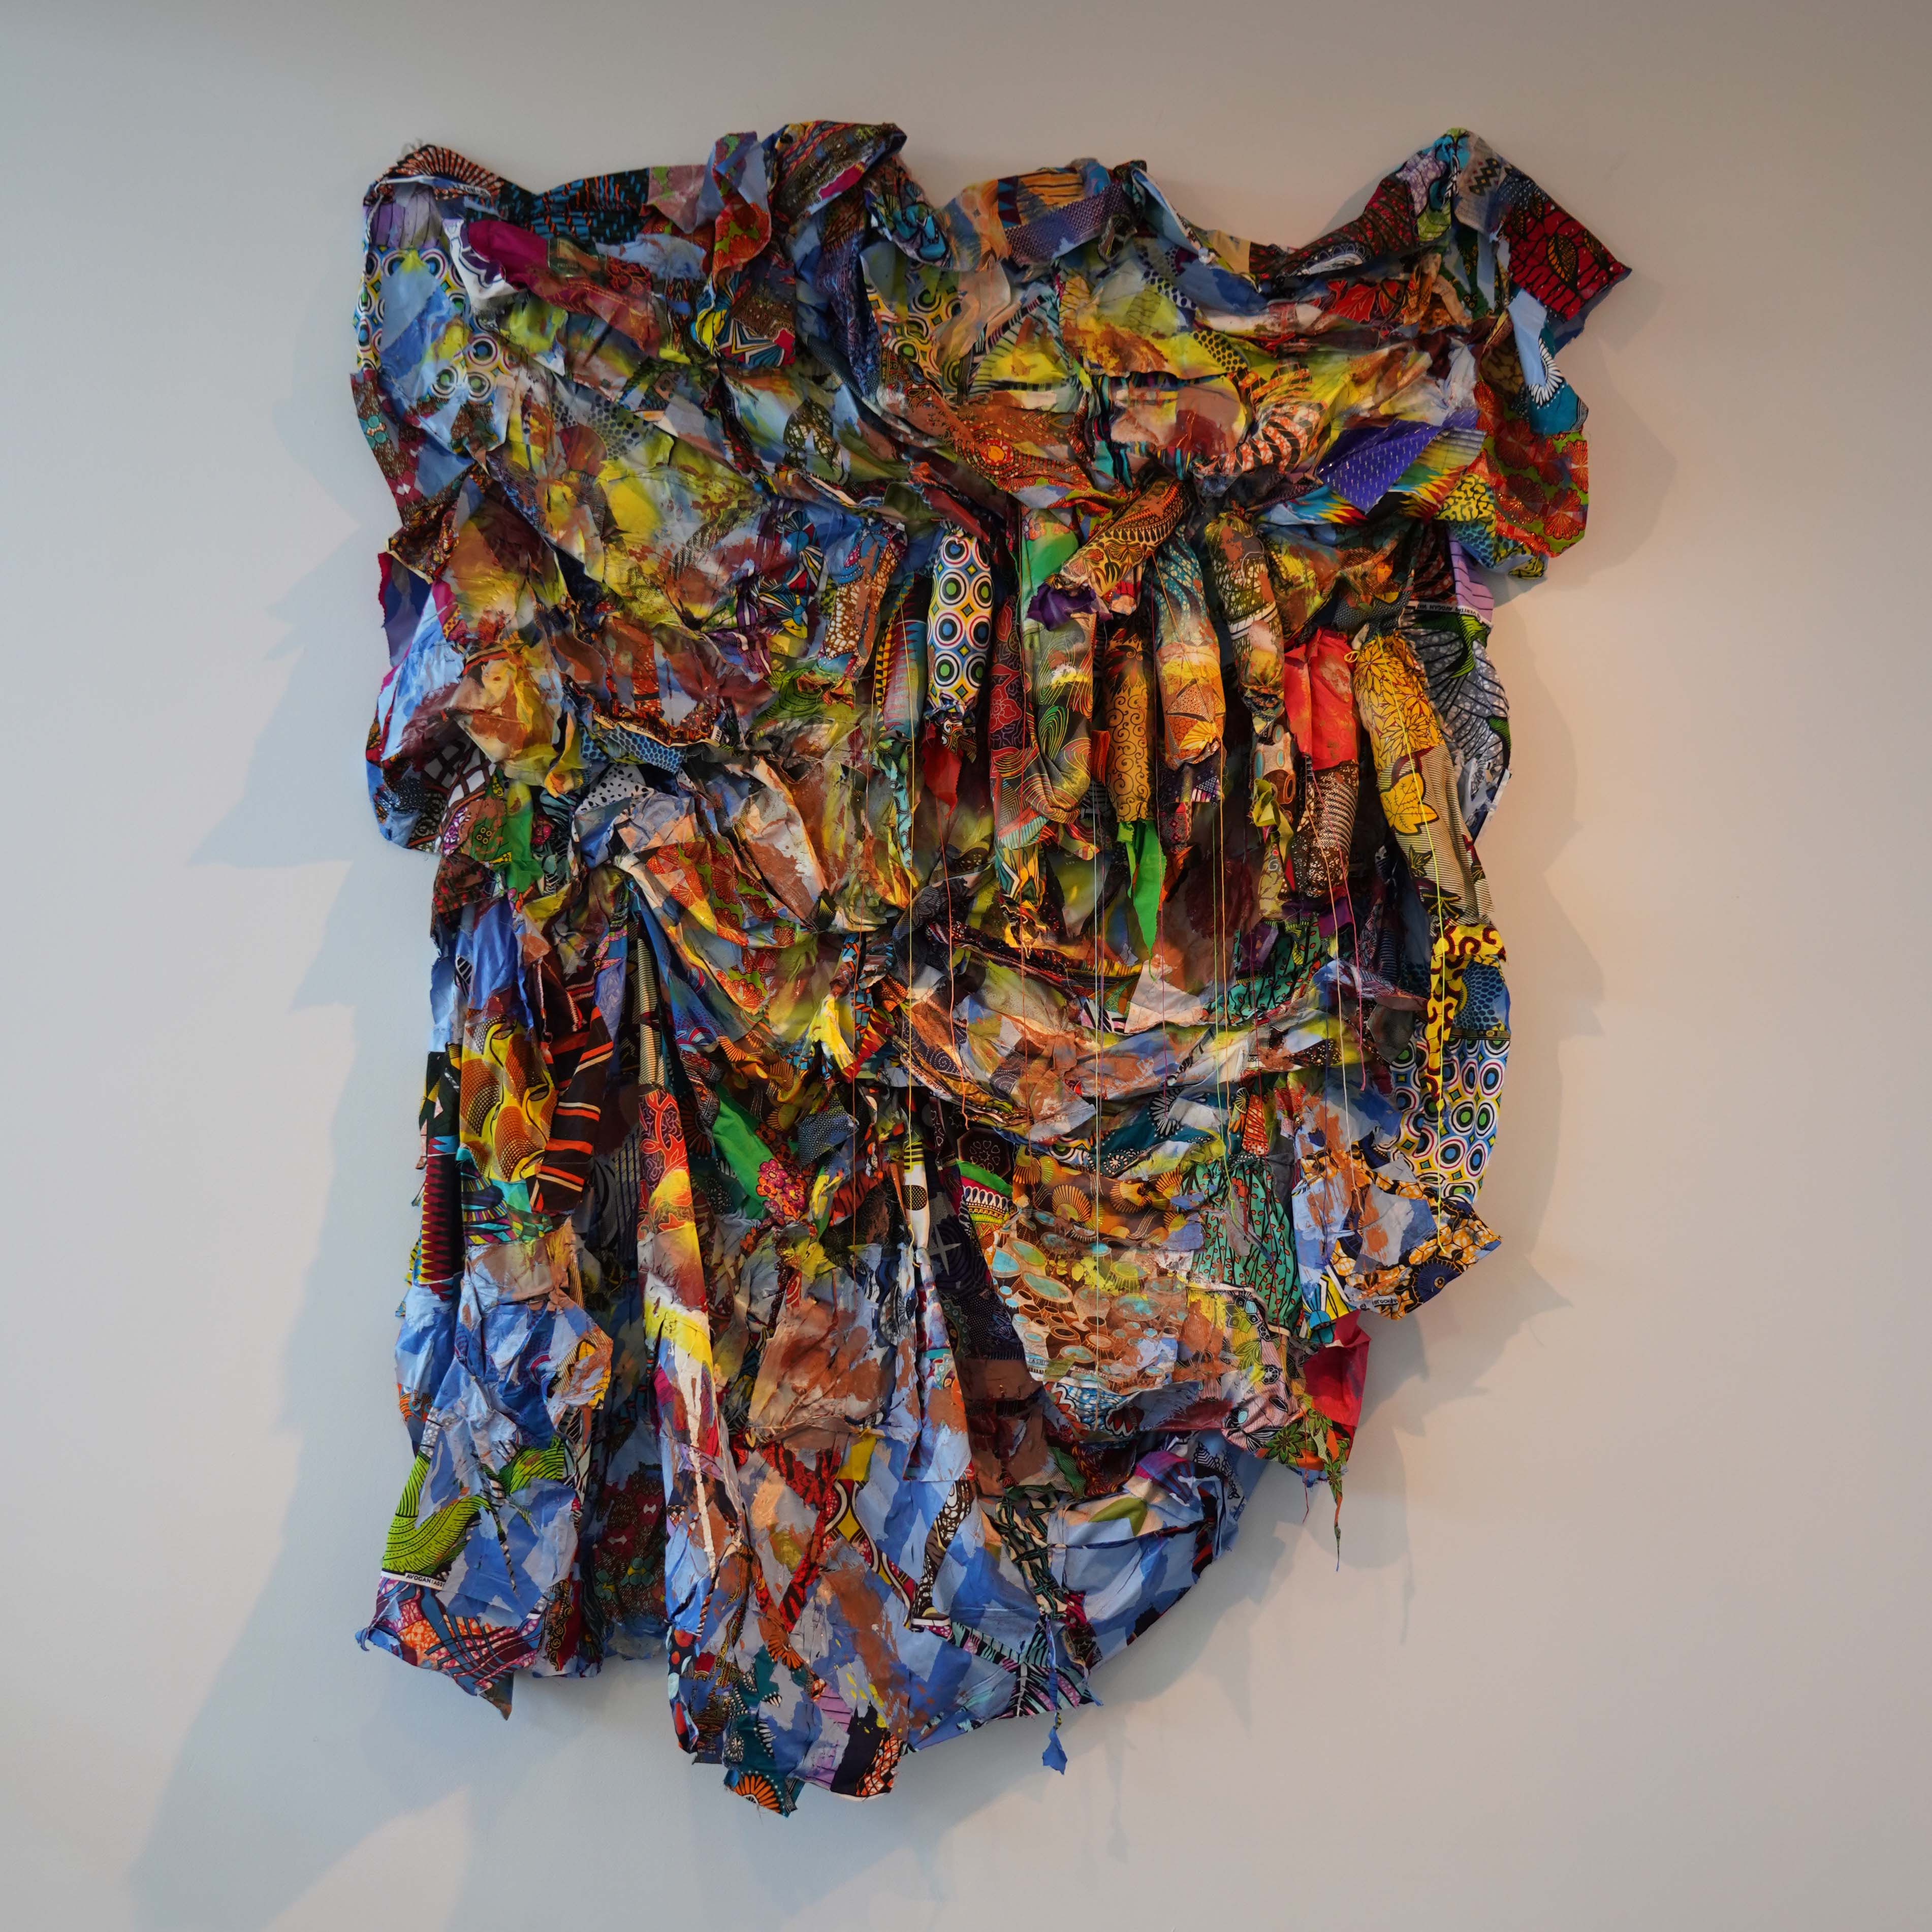 Jamele Wright fabric artwork